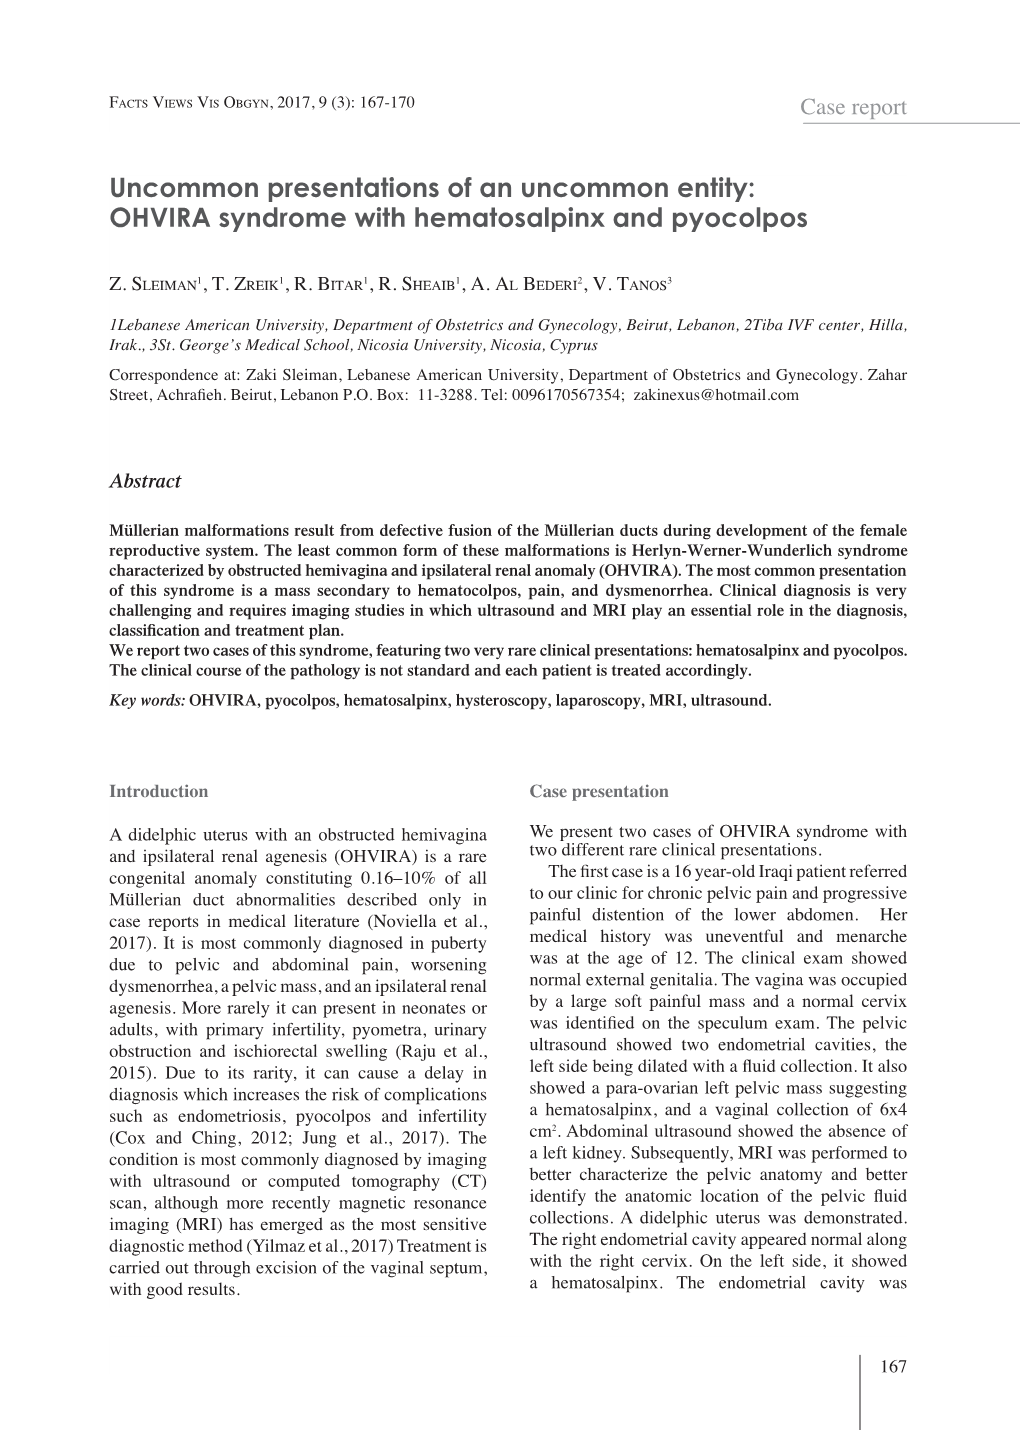 OHVIRA Syndrome with Hematosalpinx and Pyocolpos